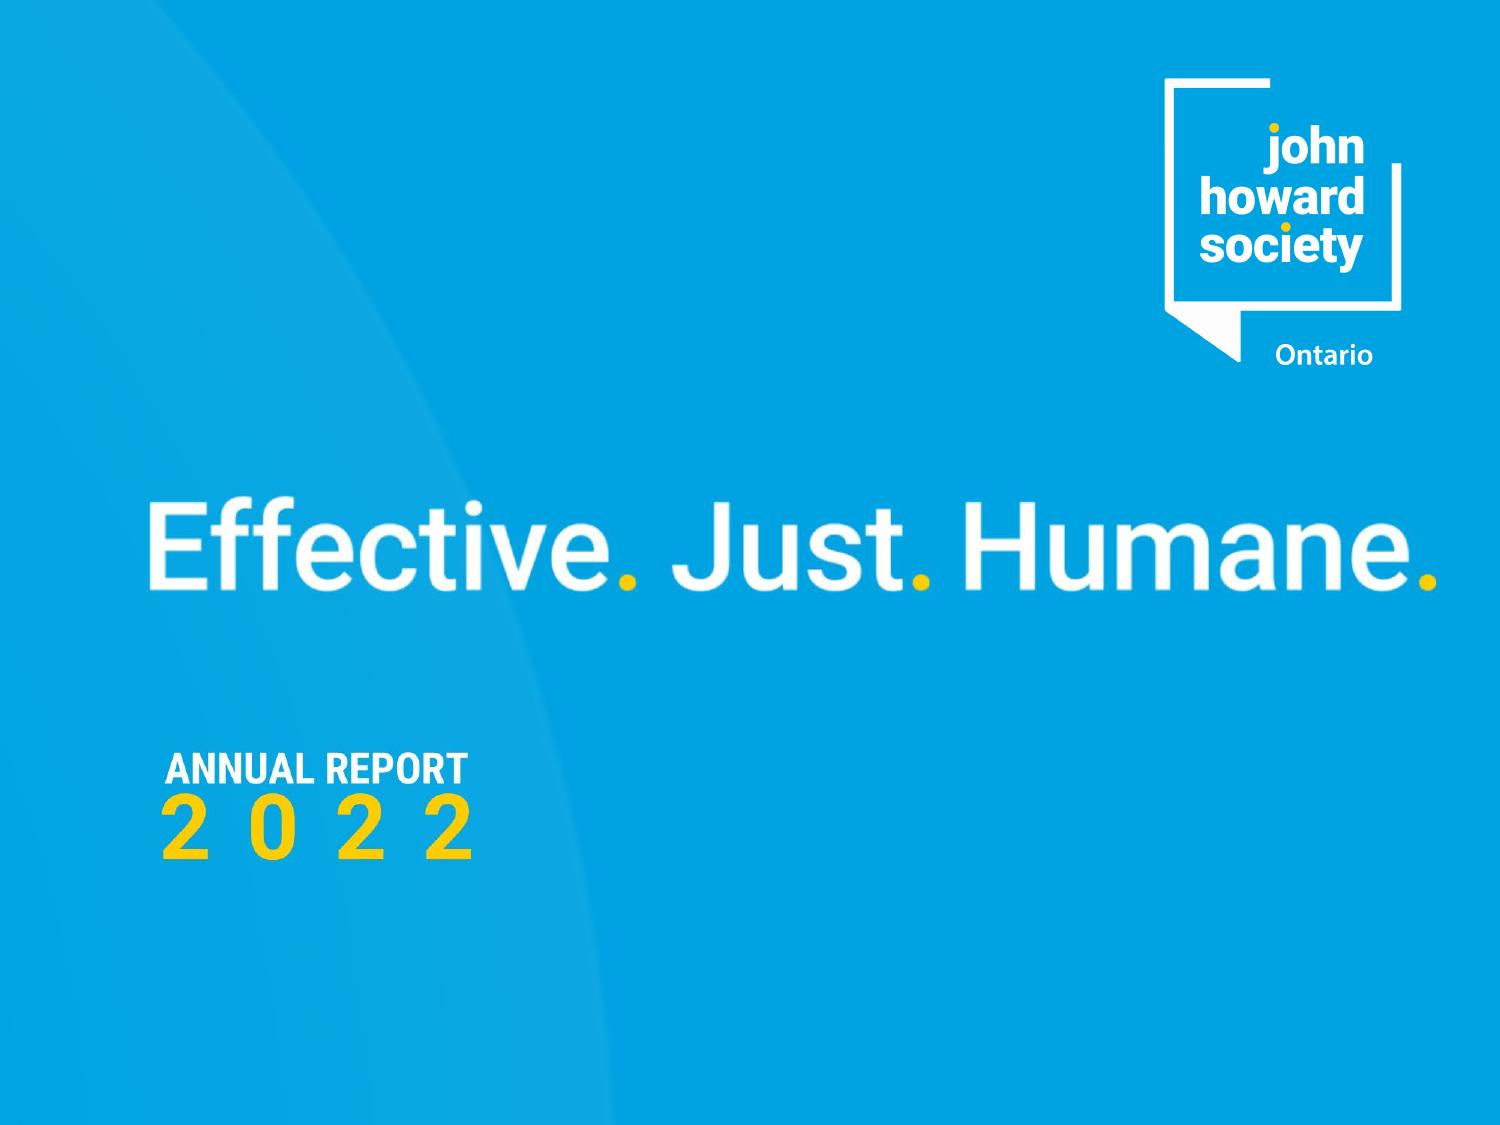 JOHNHOWARD.ON 2022 Annual Report